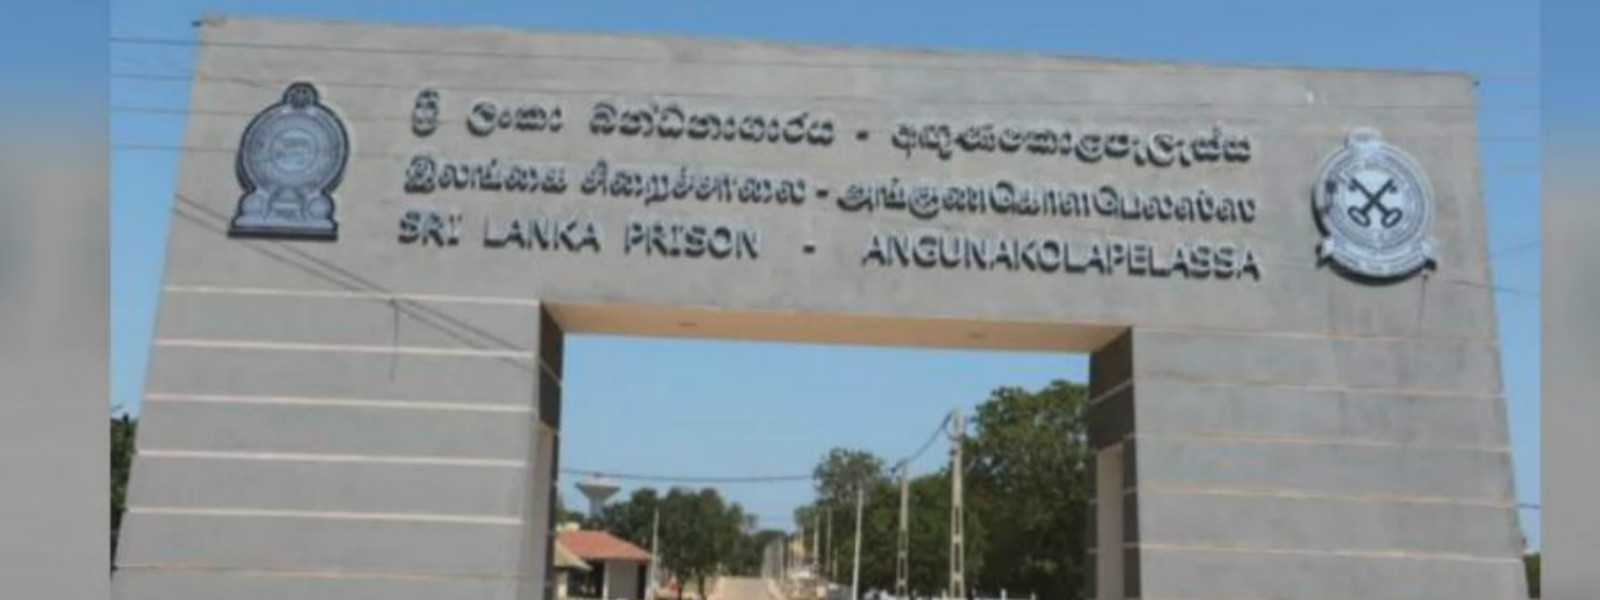 Jailer at the Agnukolapalassa prison suspended 